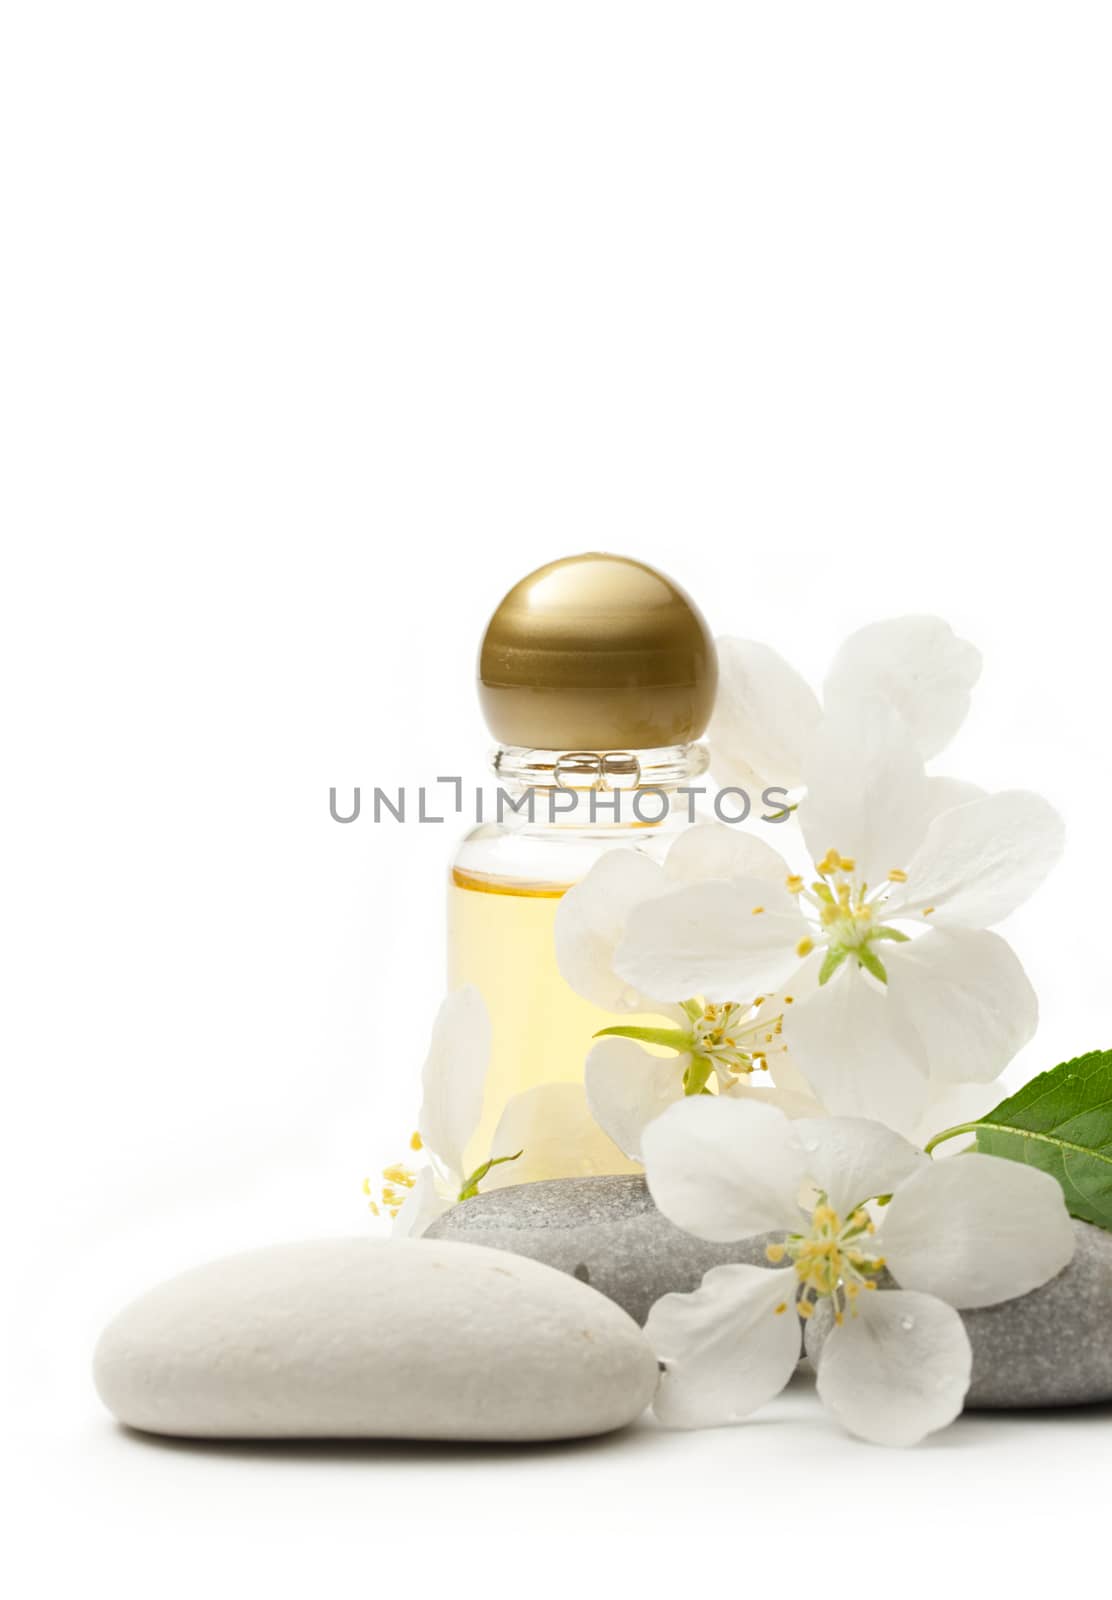 Apple tree flowers, stones and shampoo by Garsya